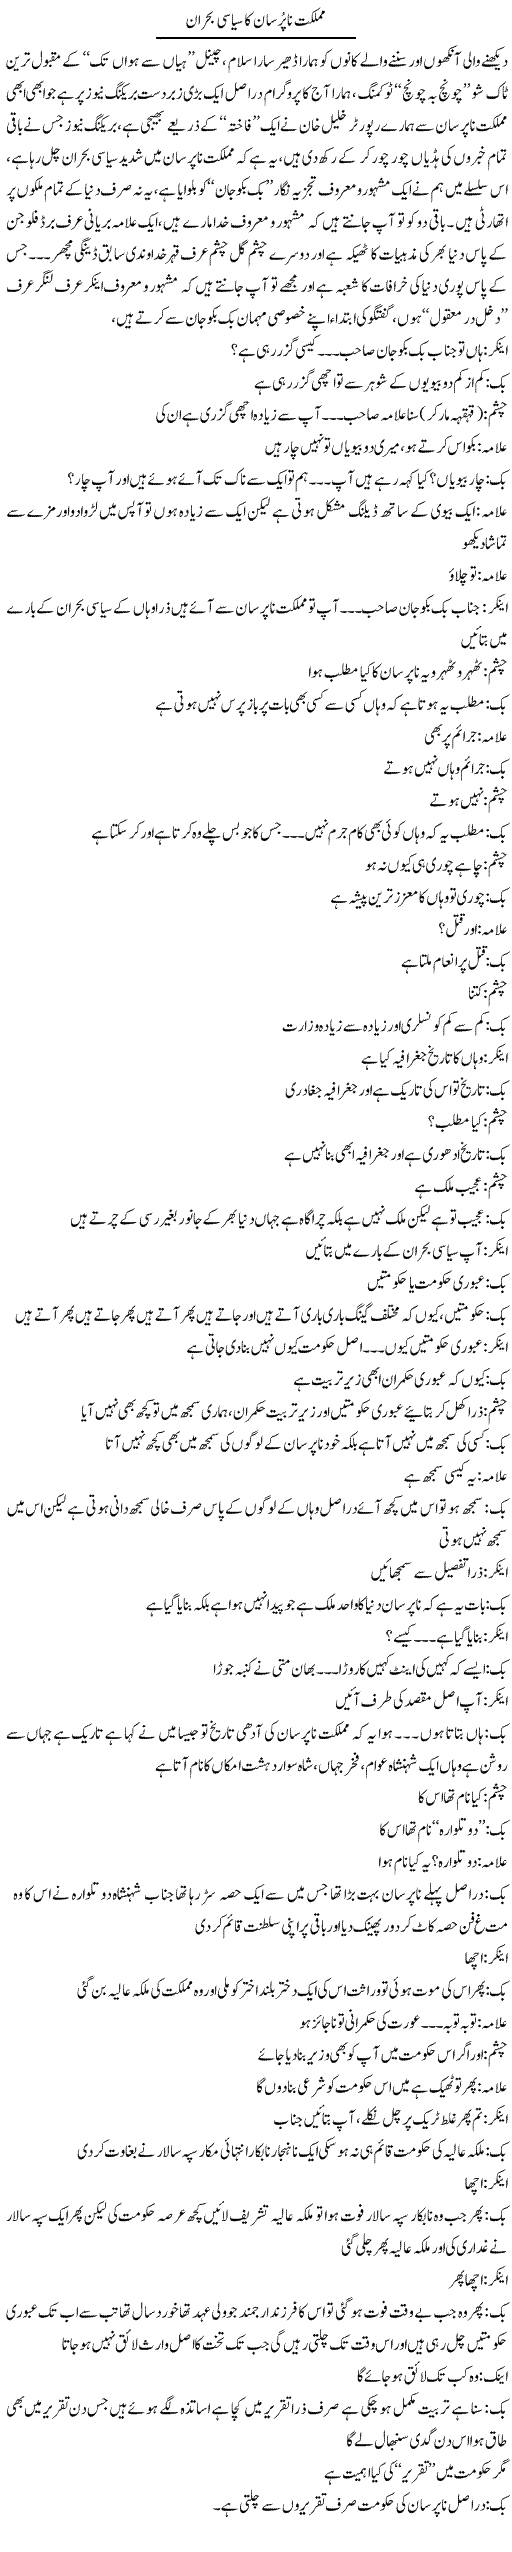 Mumlikat e Napursan Ki Siasi Buhran | Saad Ullah Jan Barq | Daily Urdu Columns